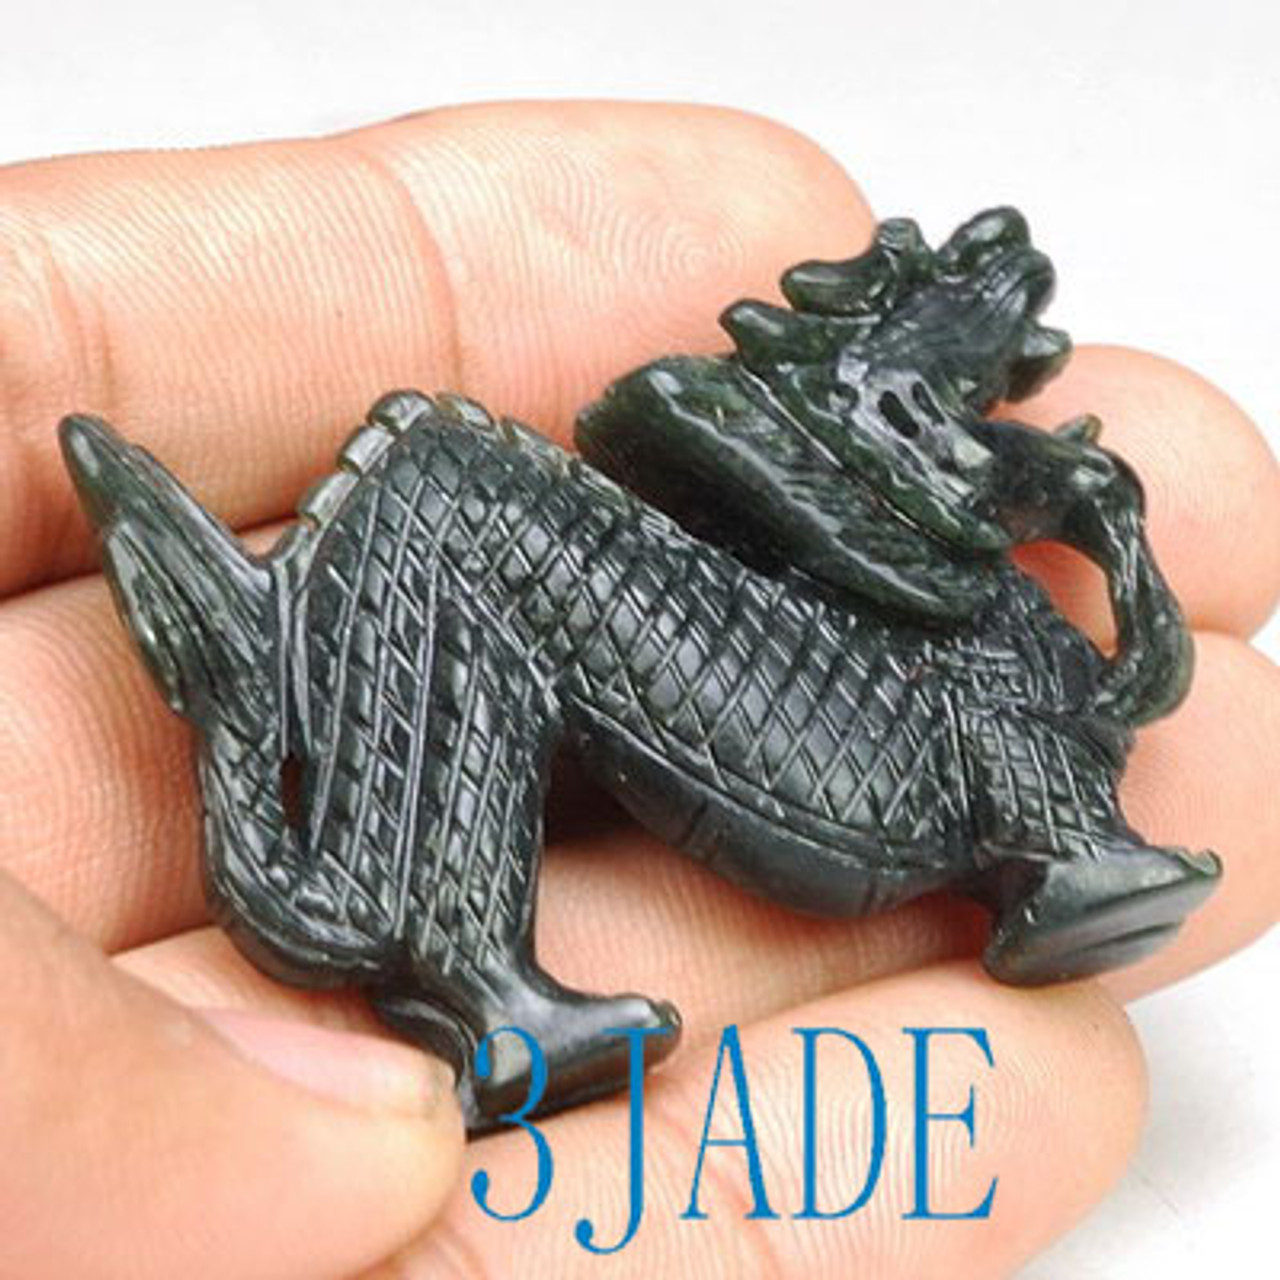  jade Dragon